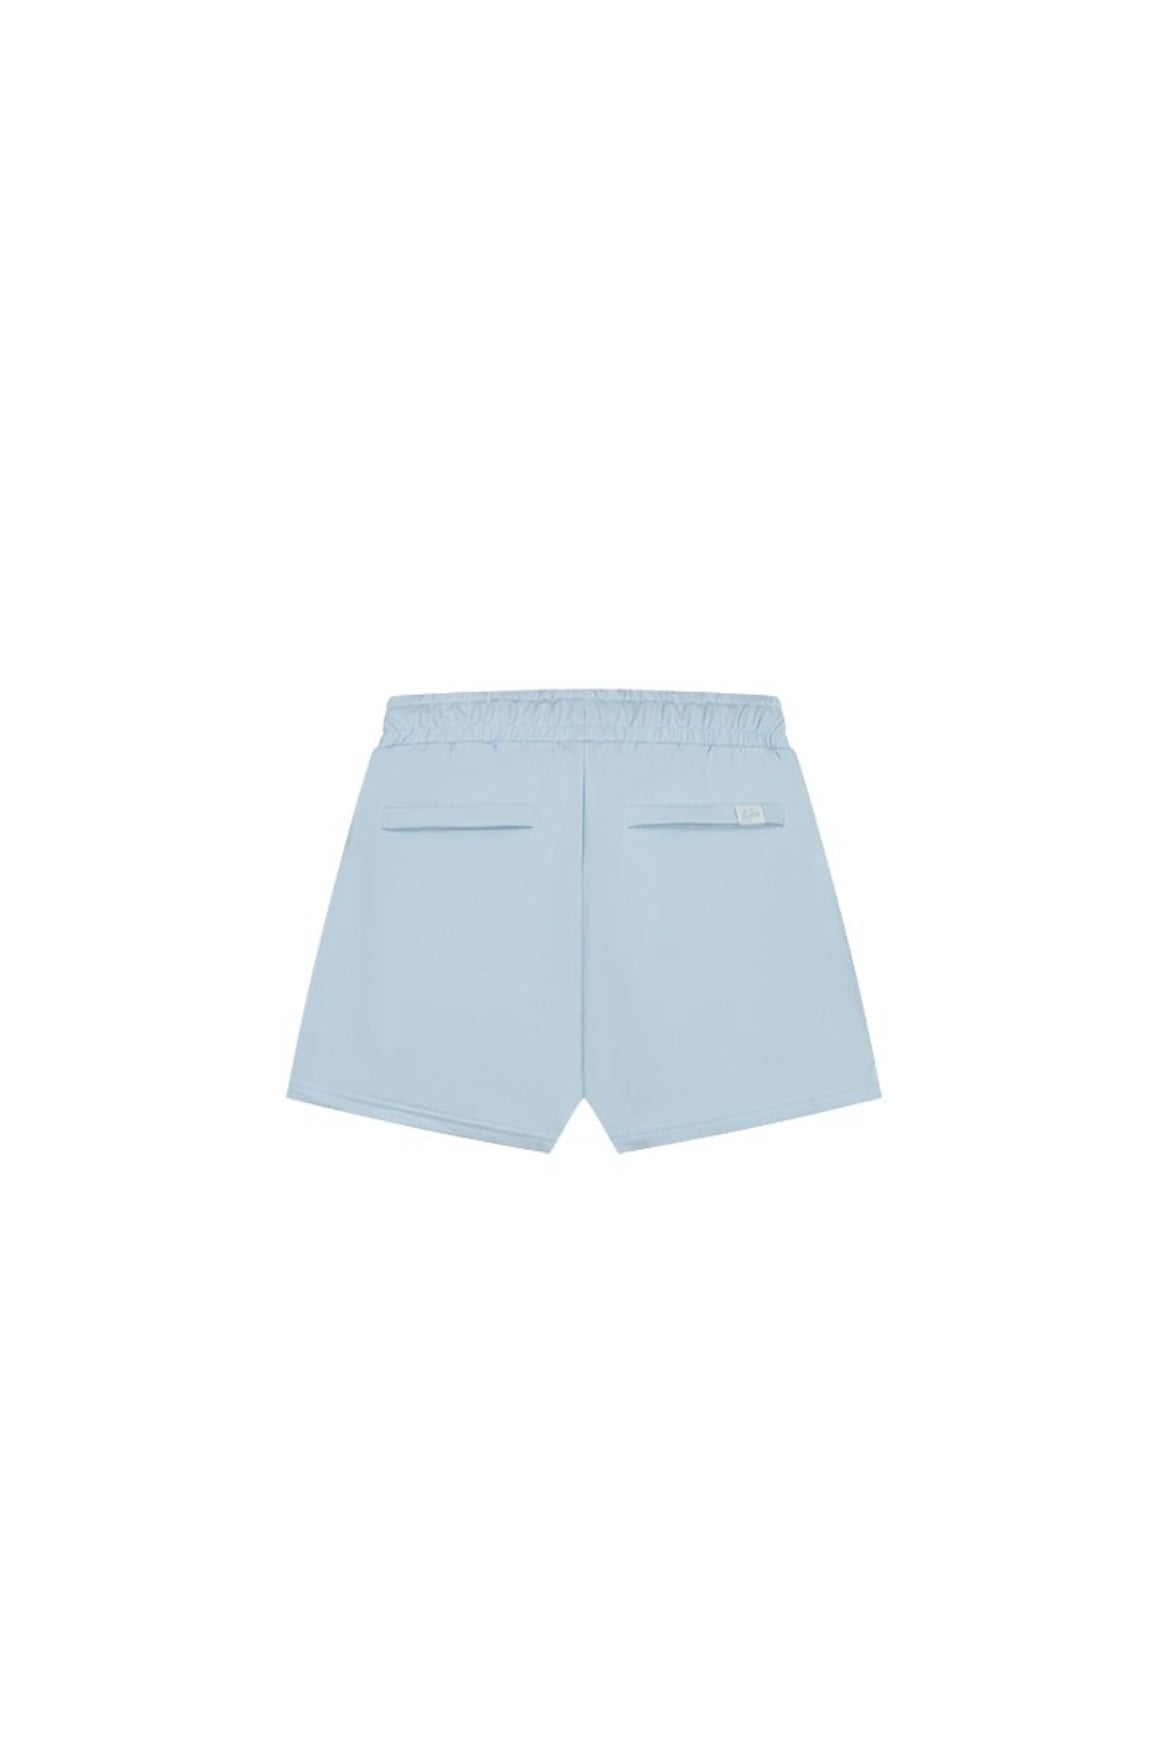 Malelions women Kiki shorts - ice blue/smoke grey